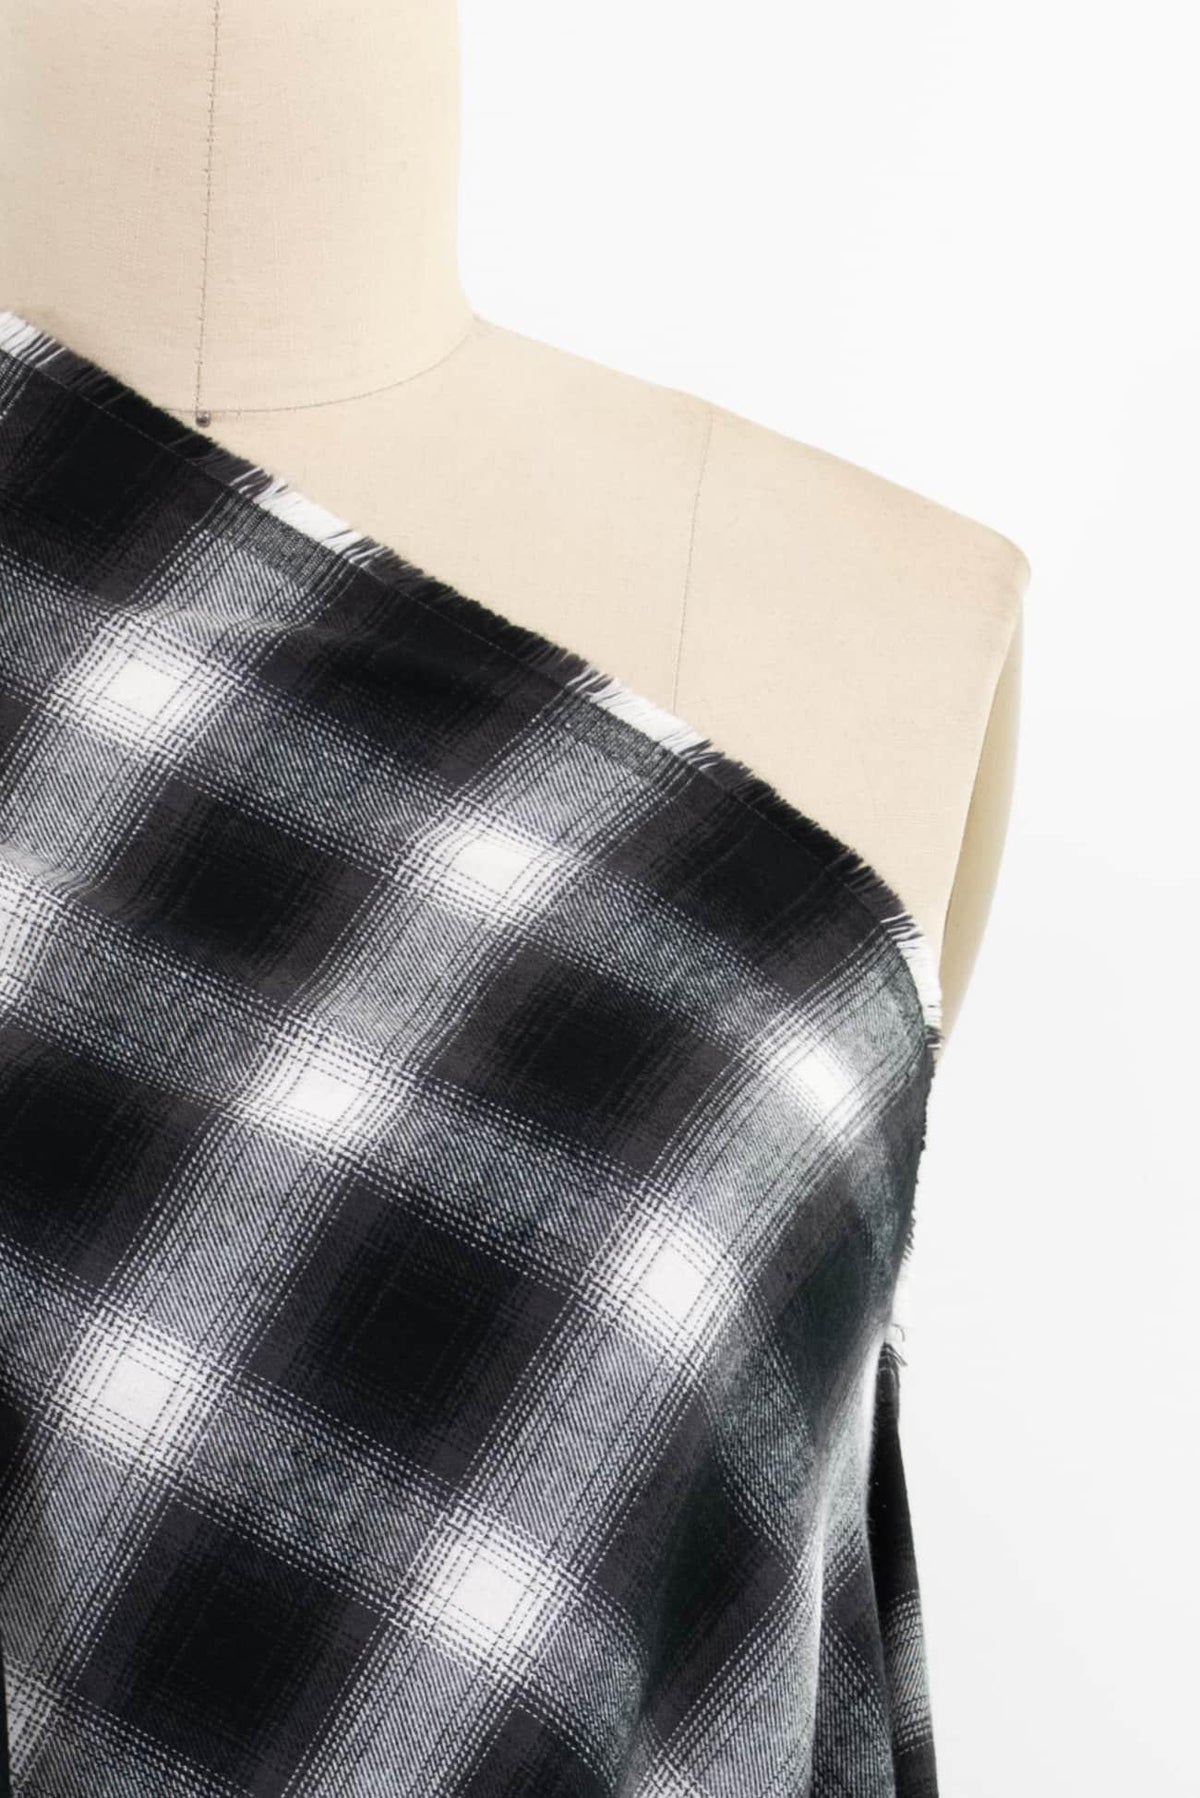 Haru Plaid Japanese Cotton Flannel Woven - Marcy Tilton Fabrics